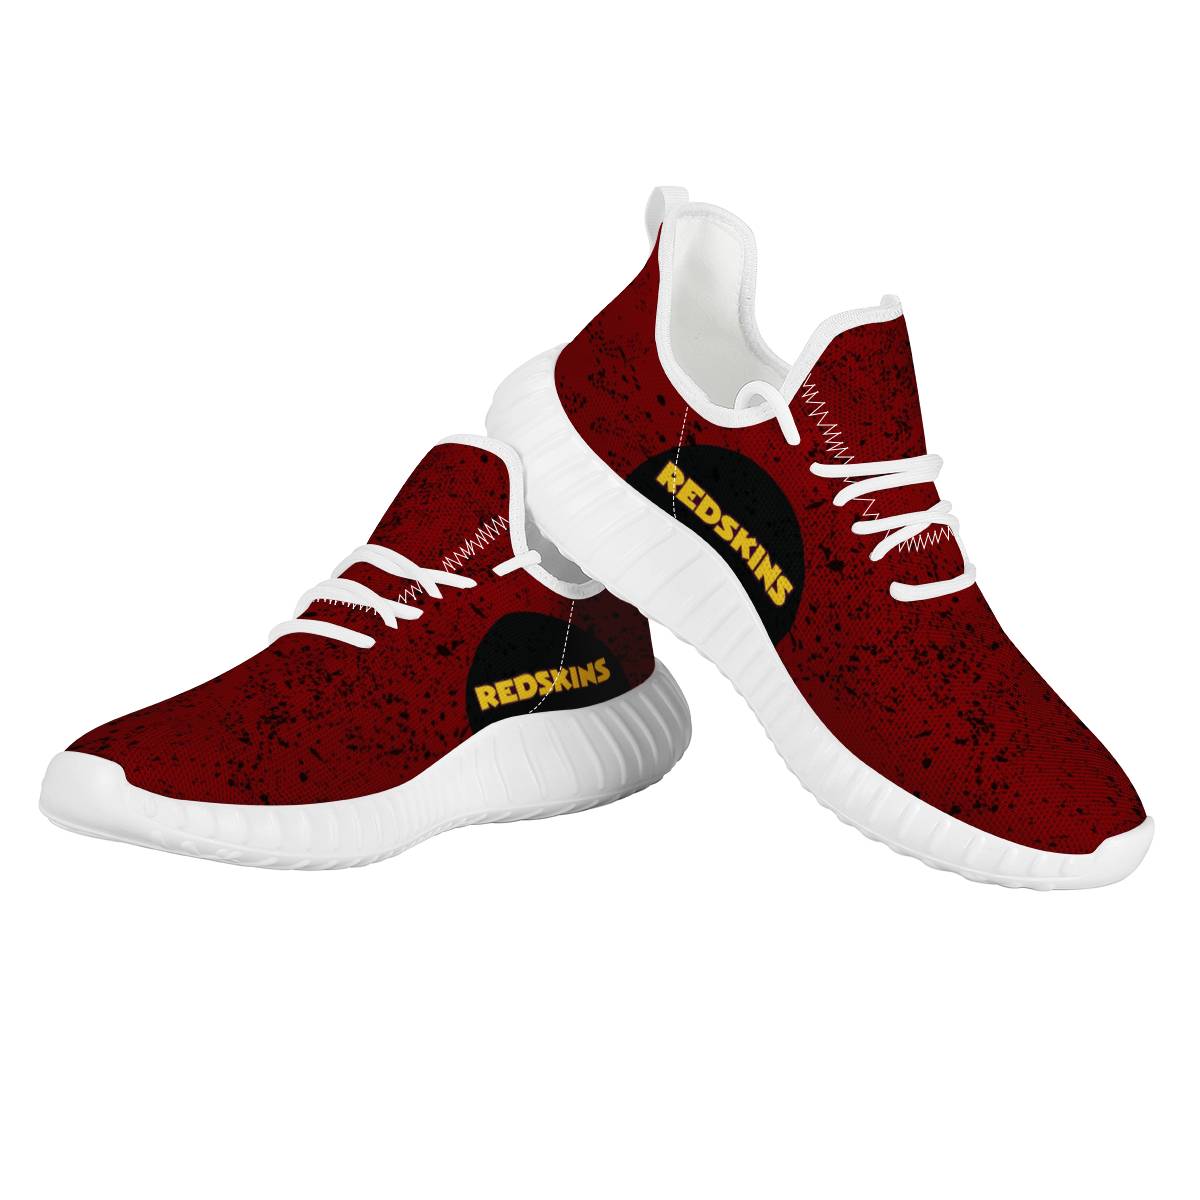 Women's Washington Redskins Mesh Knit Sneakers/Shoes 005